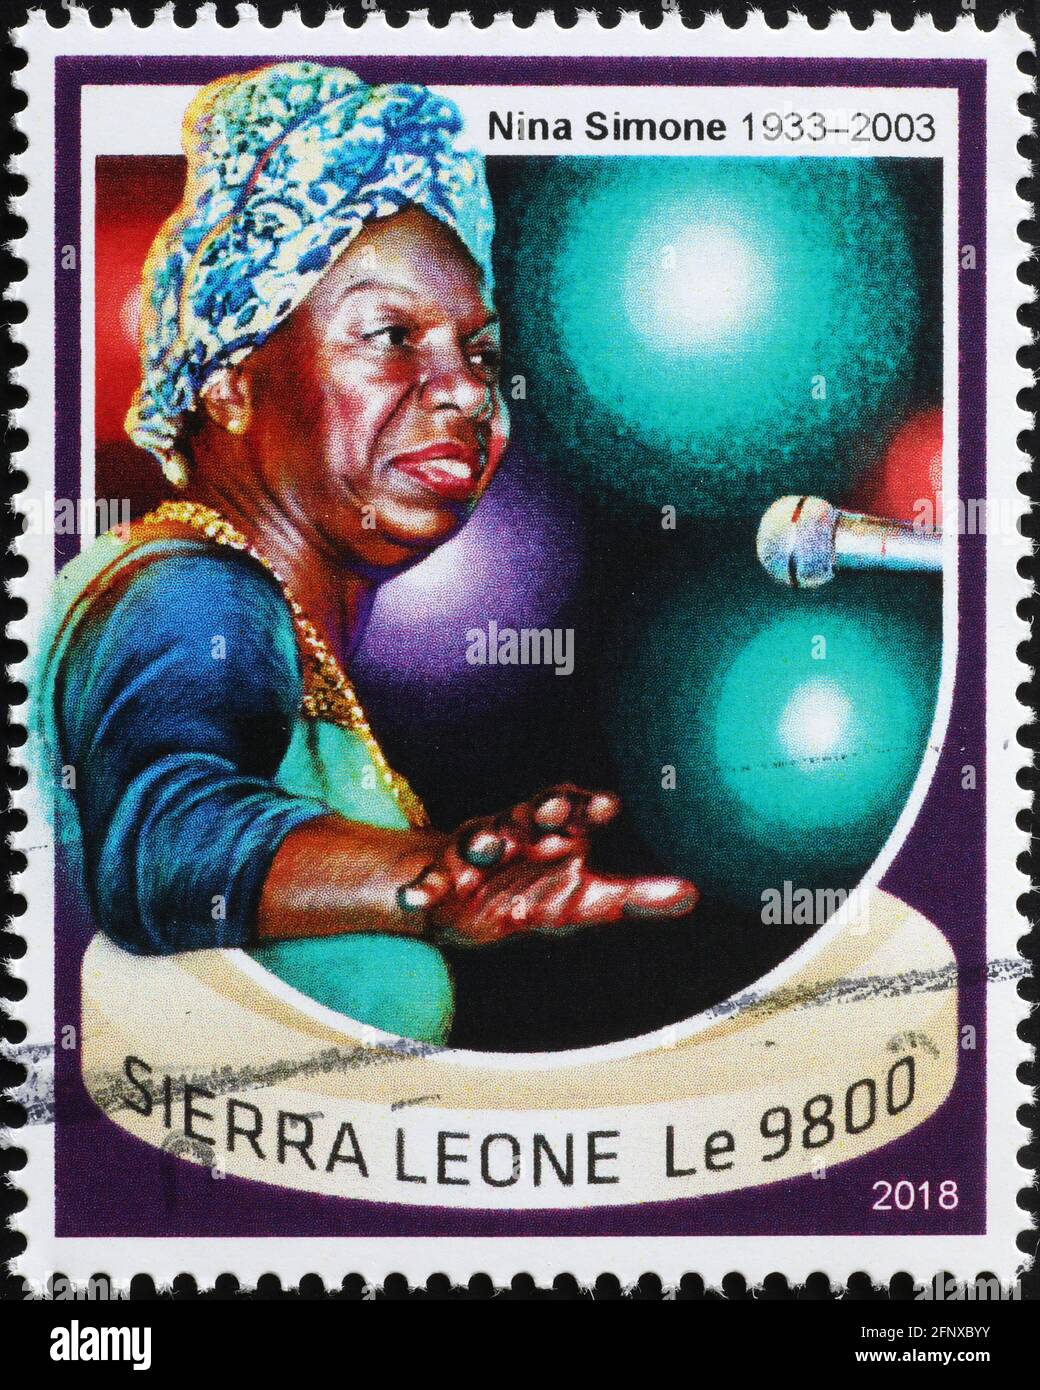 Nina Simone in concert on postage stamp Stock Photo